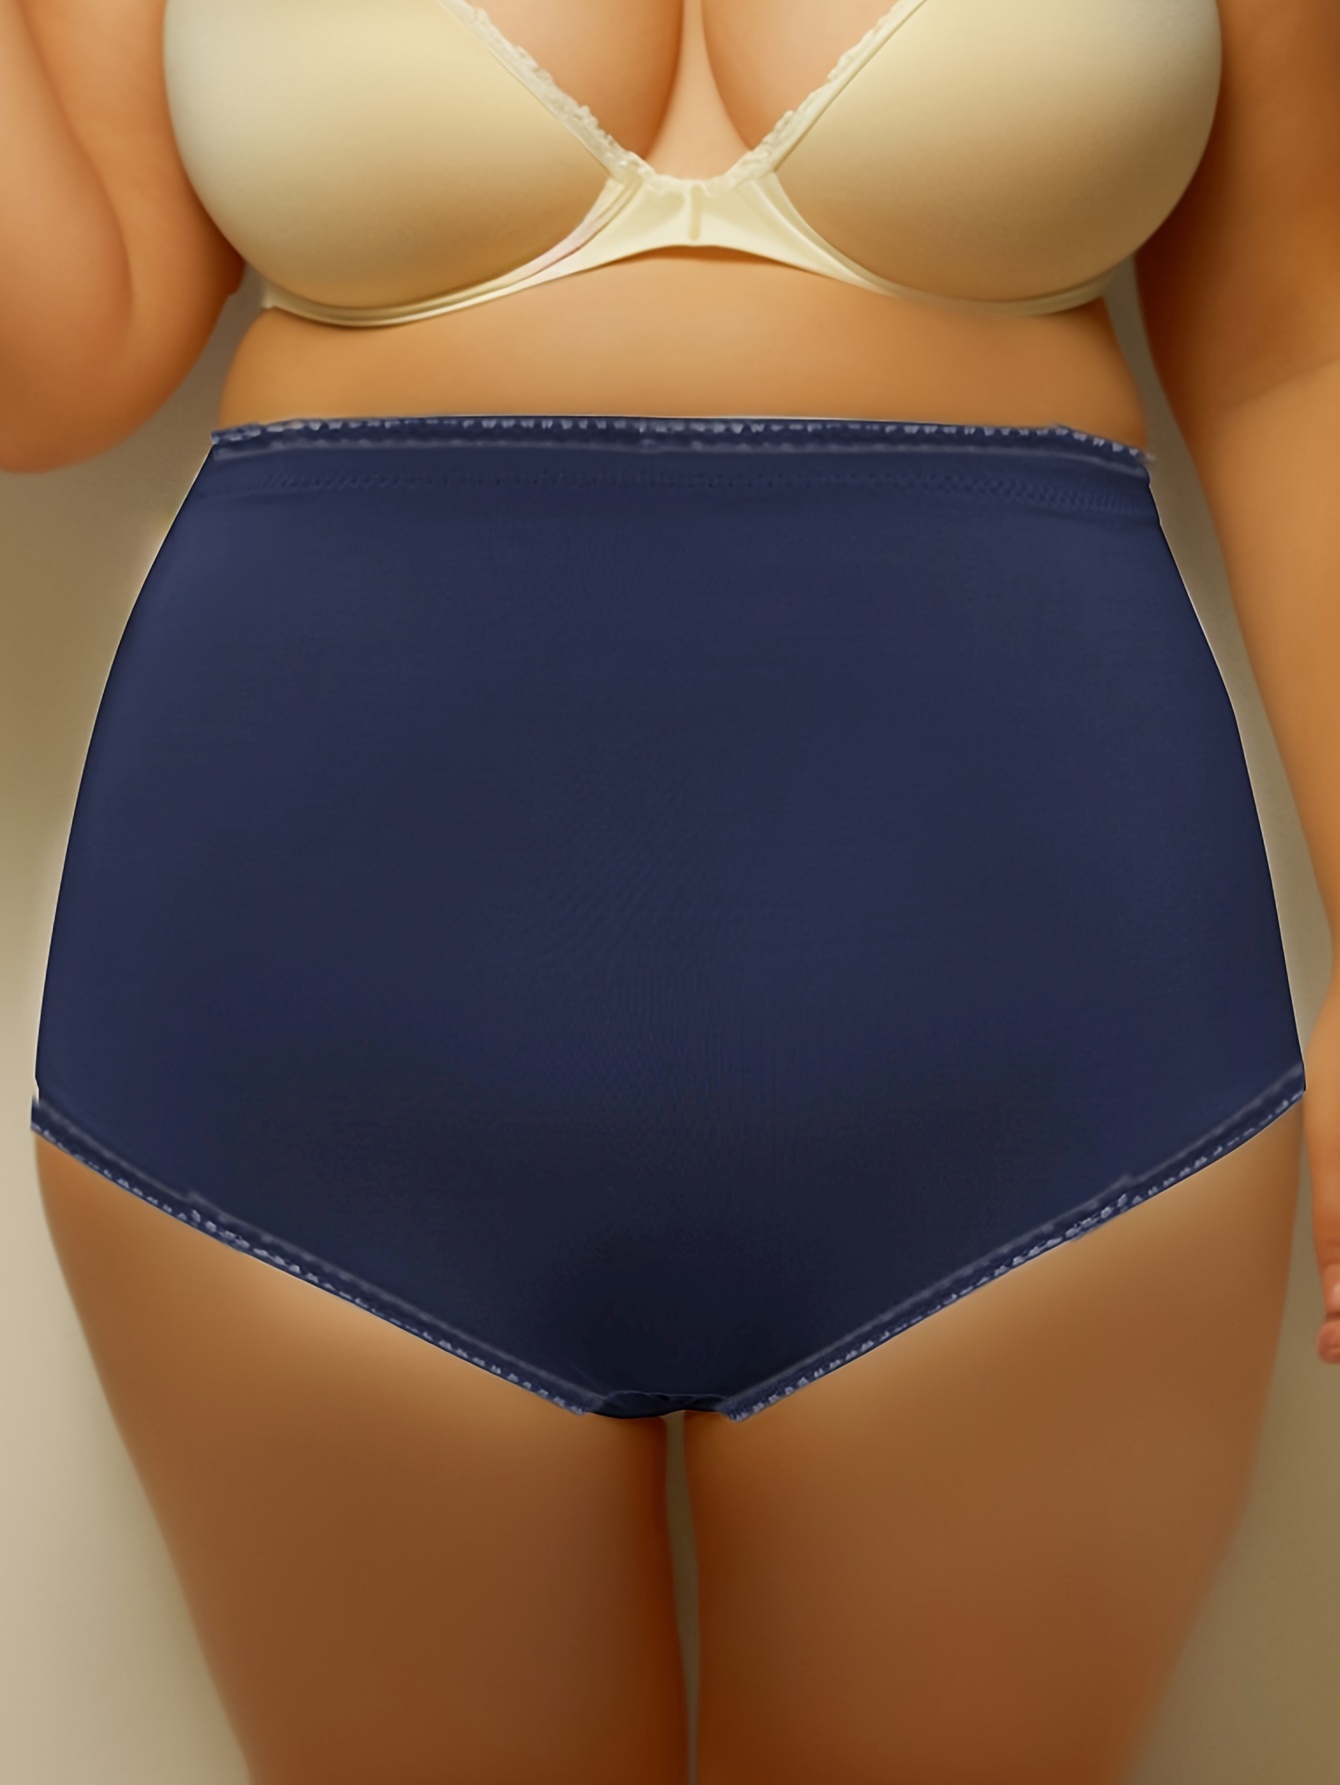 Aayomet Underwear Women Ladies Plus Size Solid Color Womens Glossy Seamless  Underwear Soft Mid Waist Briefs Panties,Blue XL